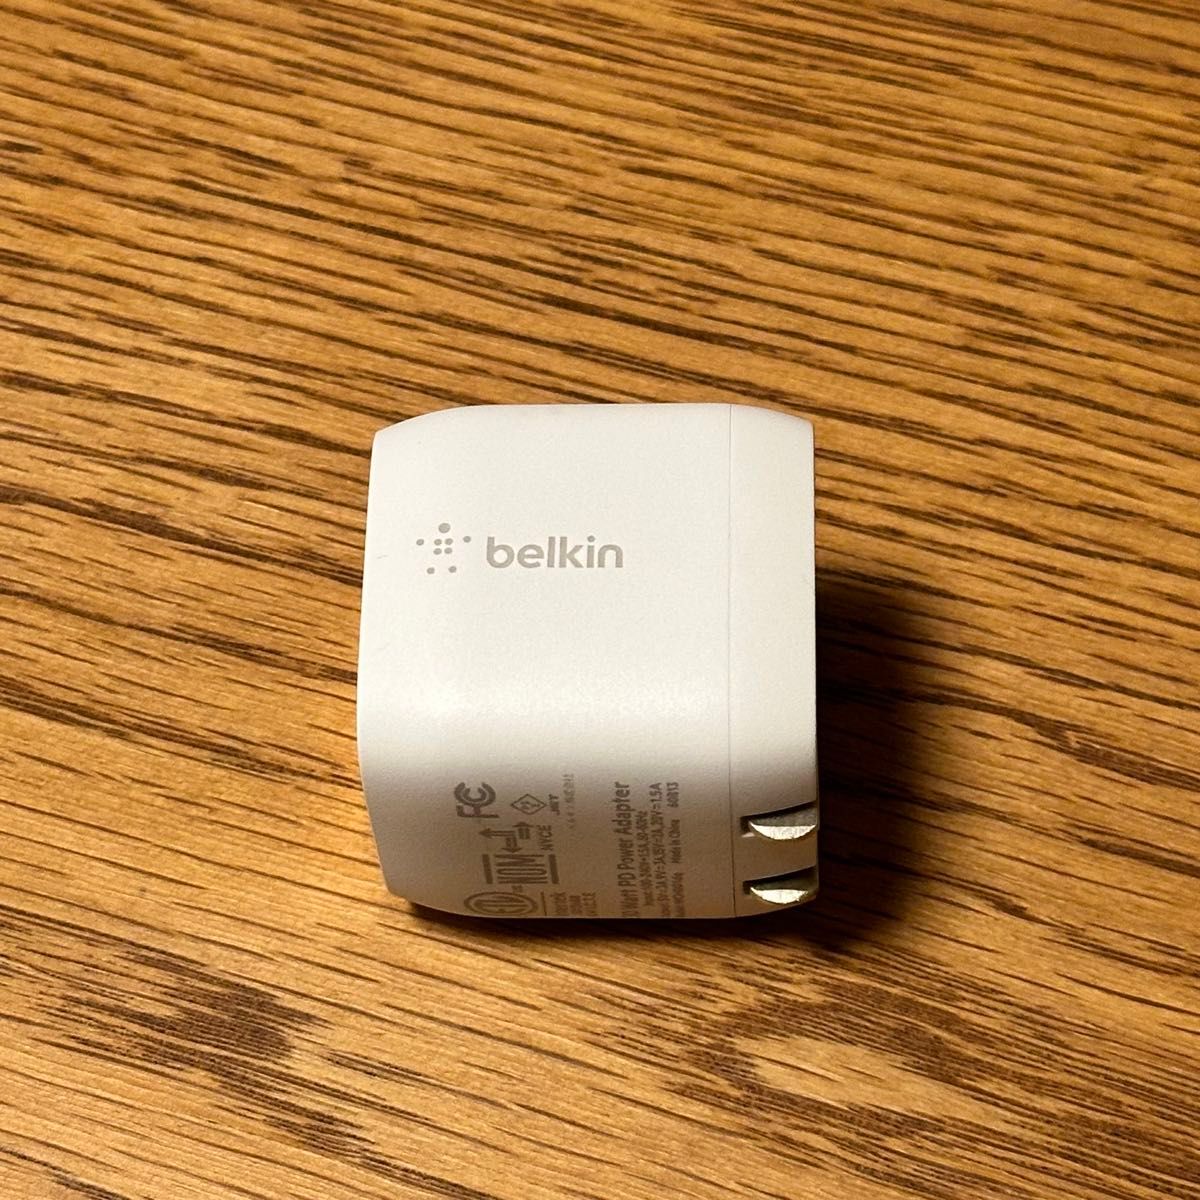 Belkin BOOST↑CHARGE PRO 30W USB-C PD GaN